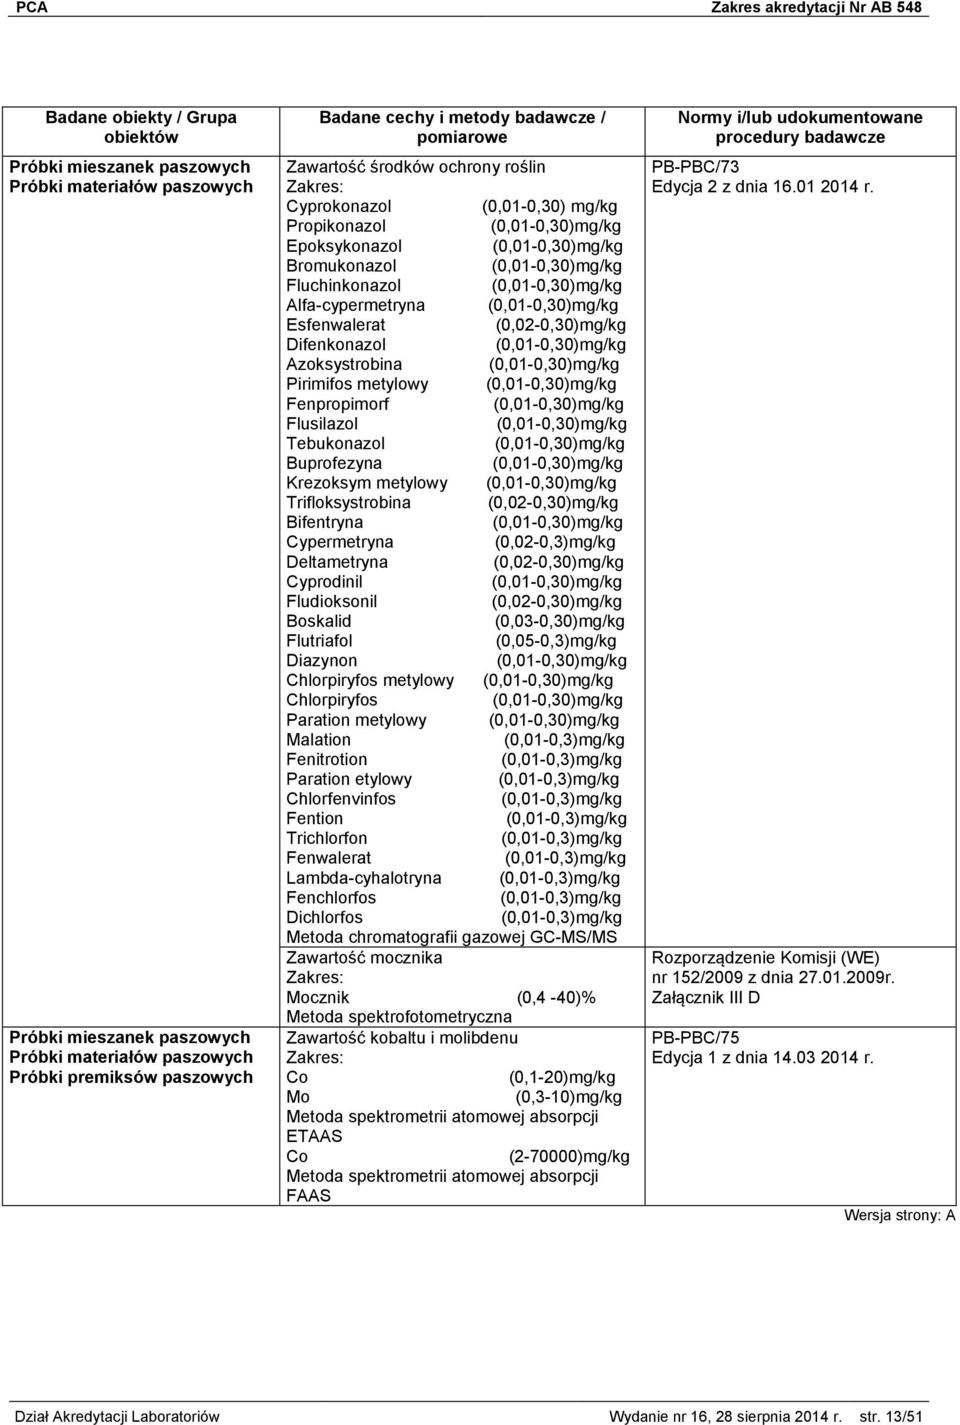 Esfenwalerat (0,02-0,30)mg/kg Difenkonazol (0,01-0,30)mg/kg Azoksystrobina (0,01-0,30)mg/kg Pirimifos metylowy (0,01-0,30)mg/kg Fenpropimorf (0,01-0,30)mg/kg Flusilazol (0,01-0,30)mg/kg Tebukonazol